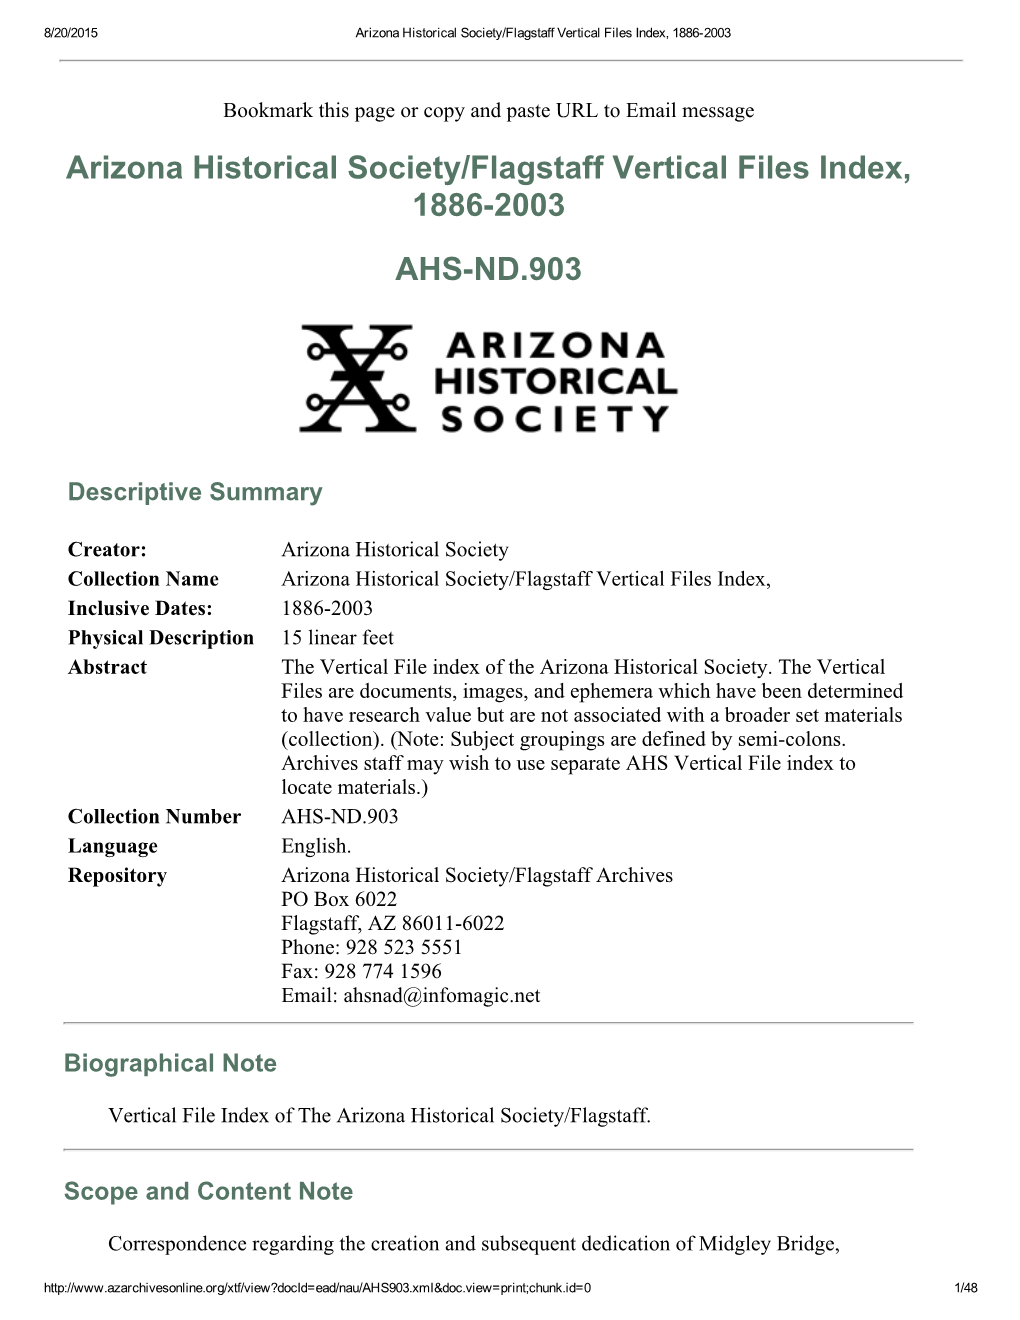 Arizona Historical Society/Flagstaff Vertical Files Index, 18862003